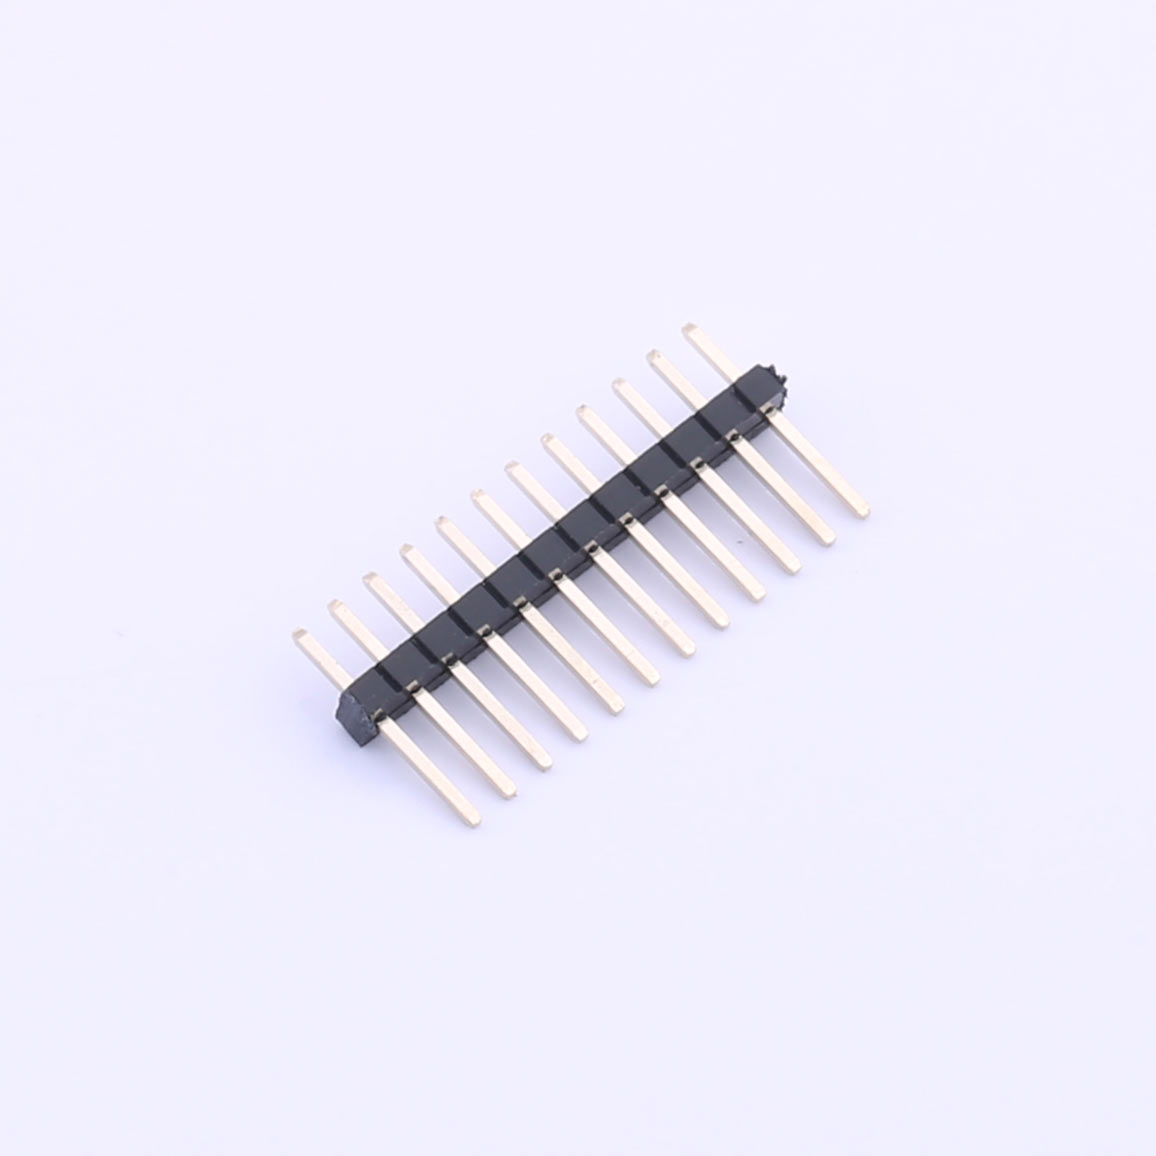 Kinghelm 1.27mm Pin Header Connector 12 Pin 1A - KH-1.27PH180-1X12P-L7.2